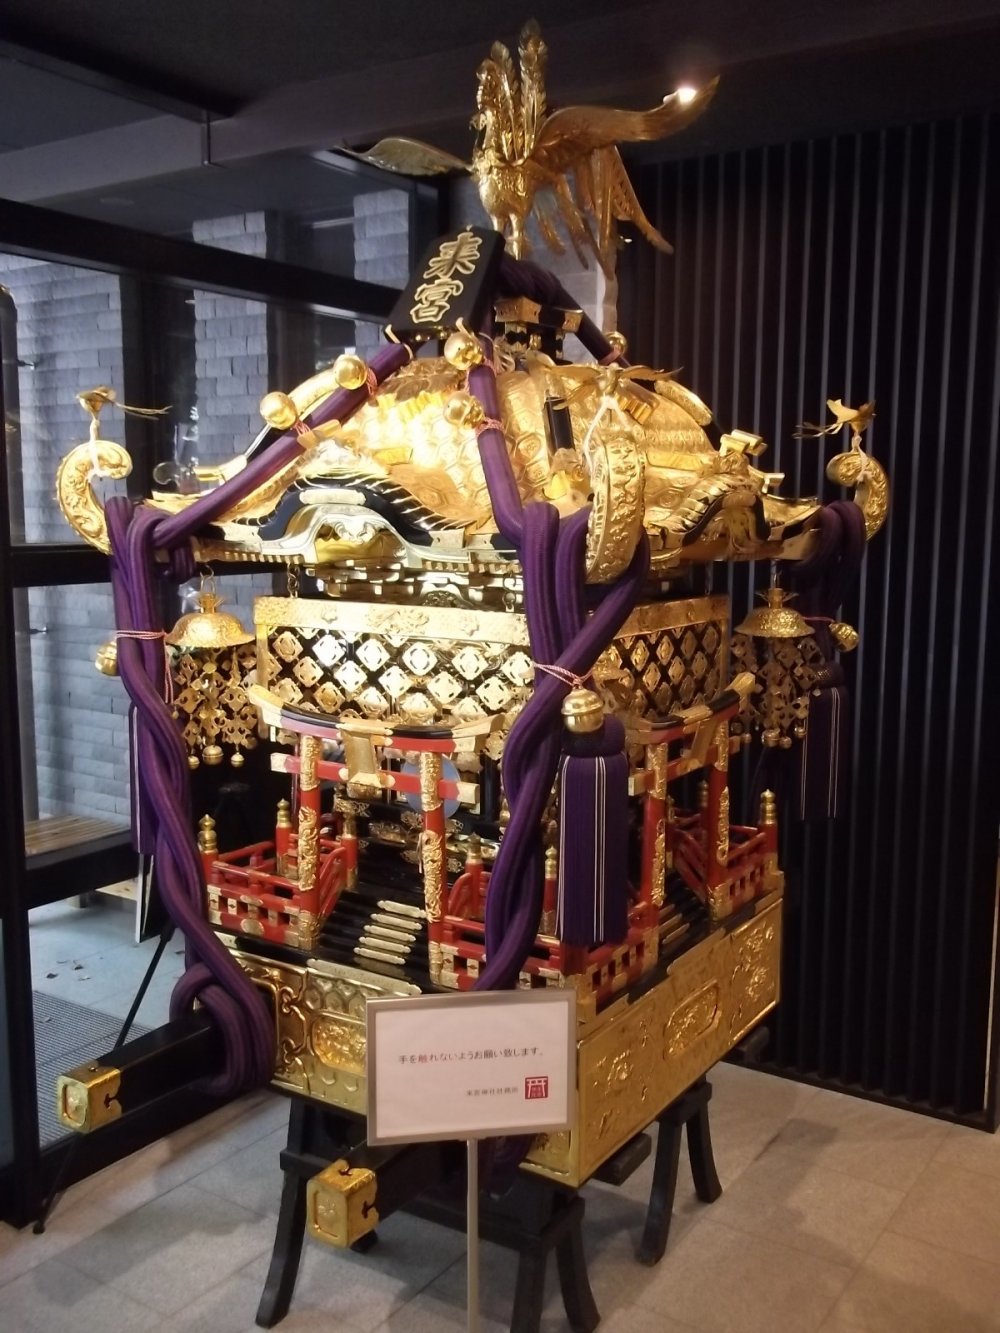 A portable shrine on display